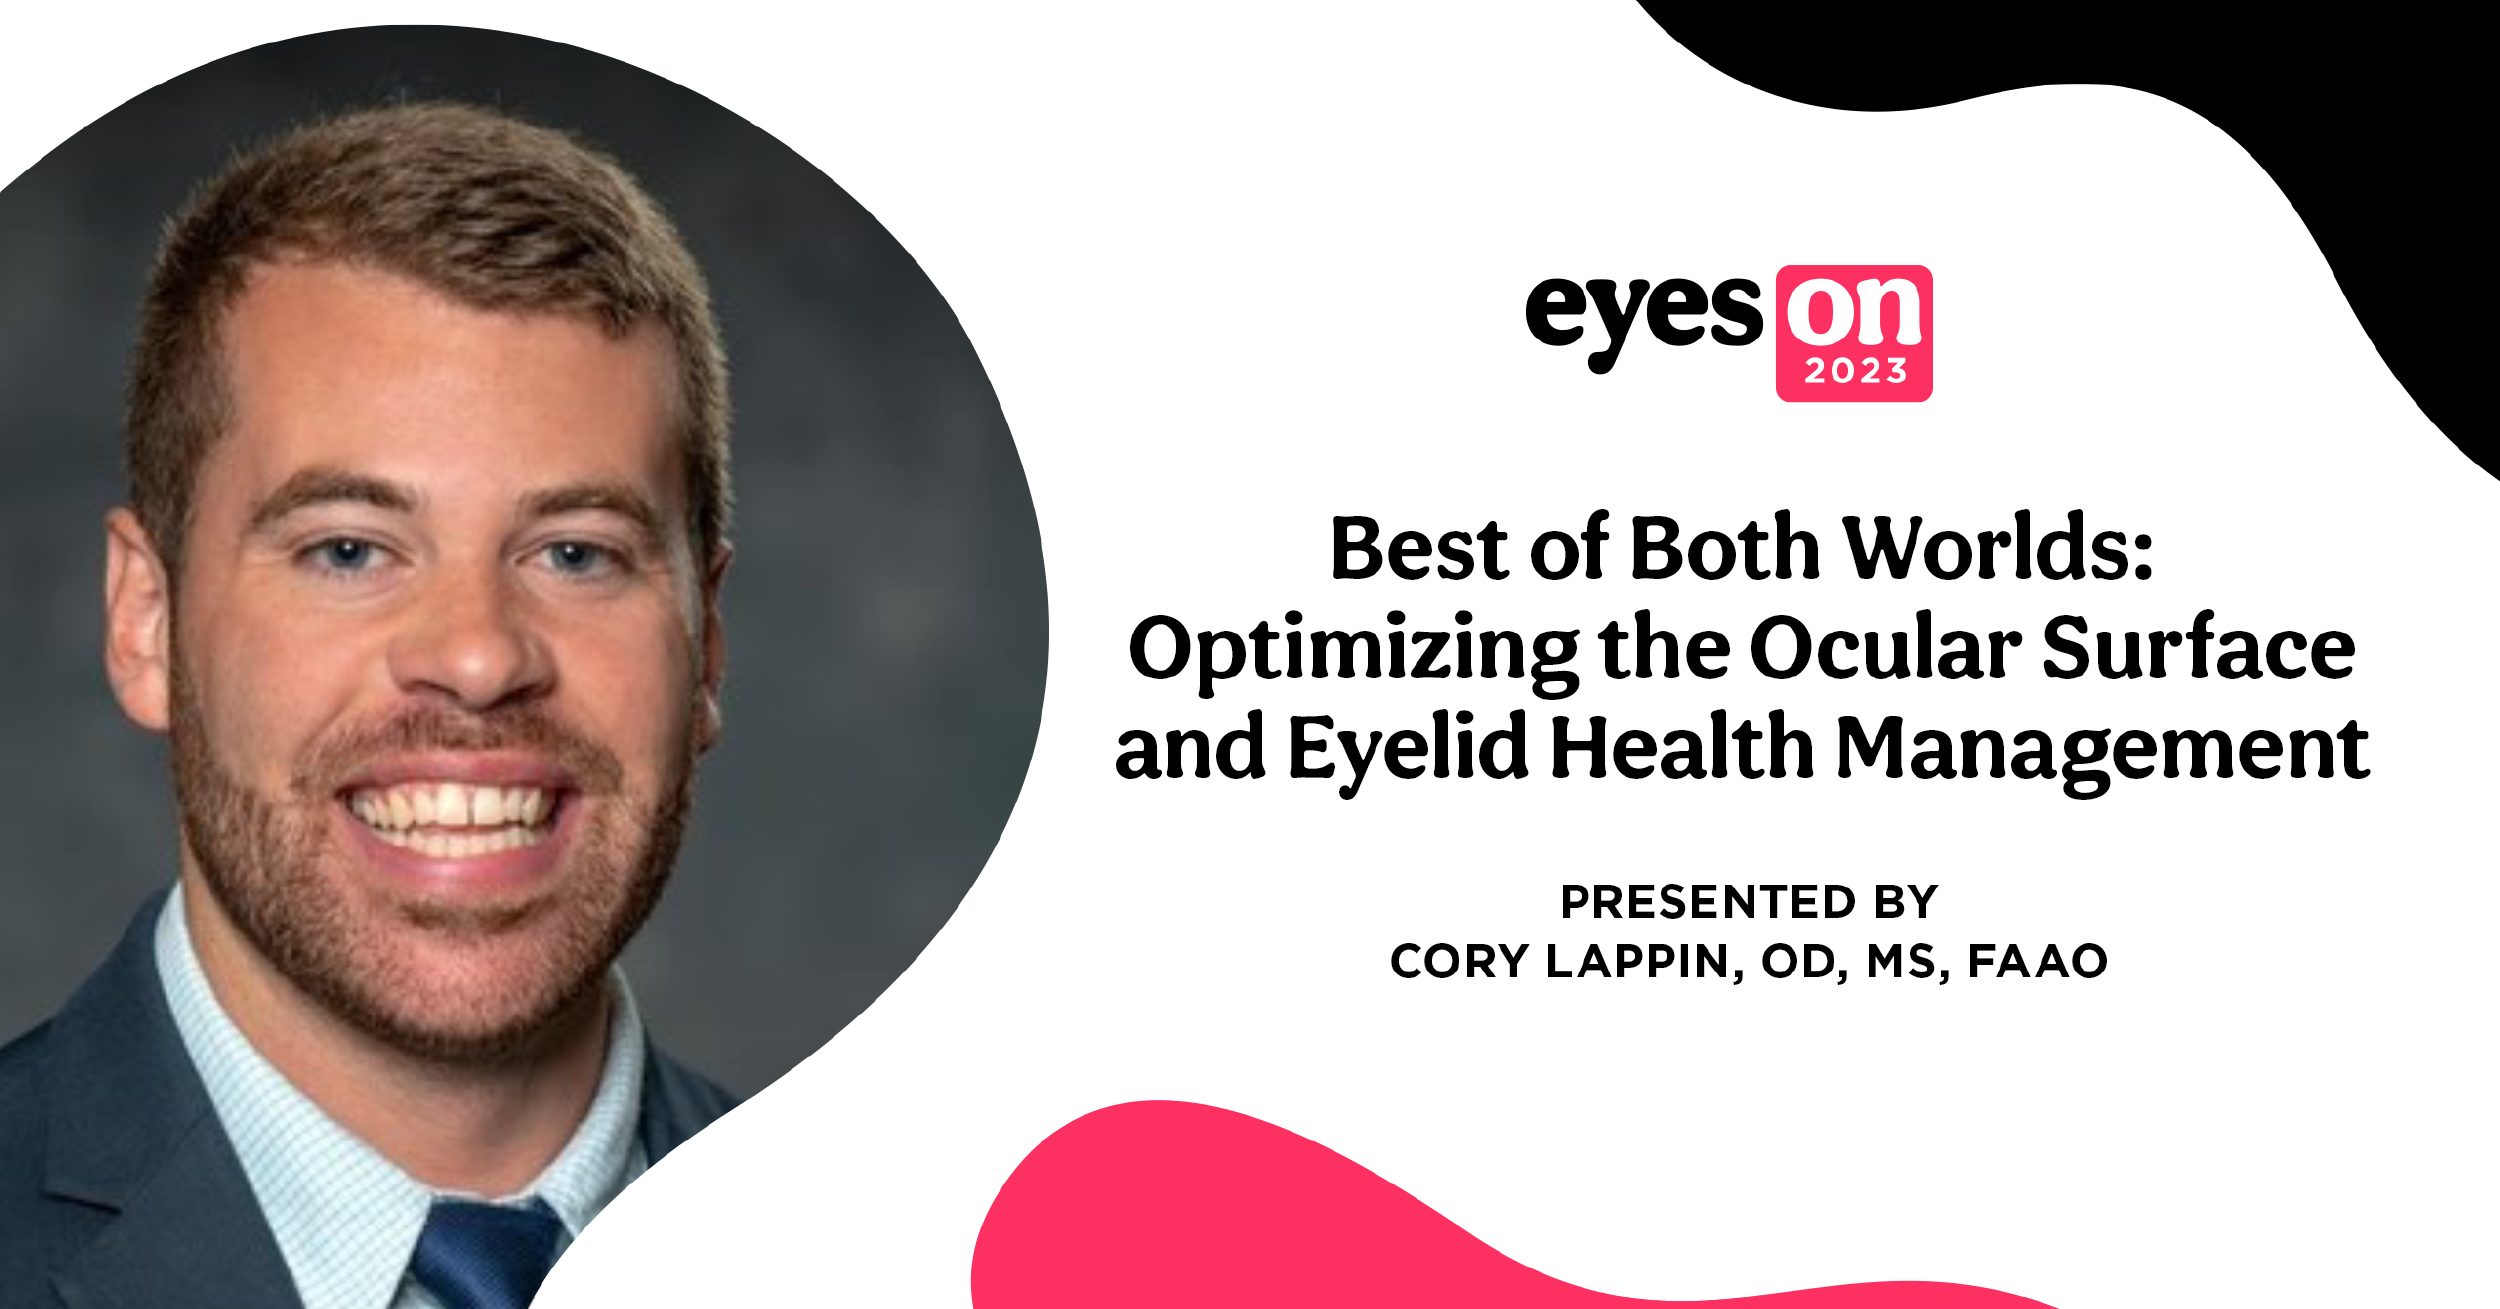 Best of Both Worlds: Optimizing the Ocular Surface and Eyelid Health Management